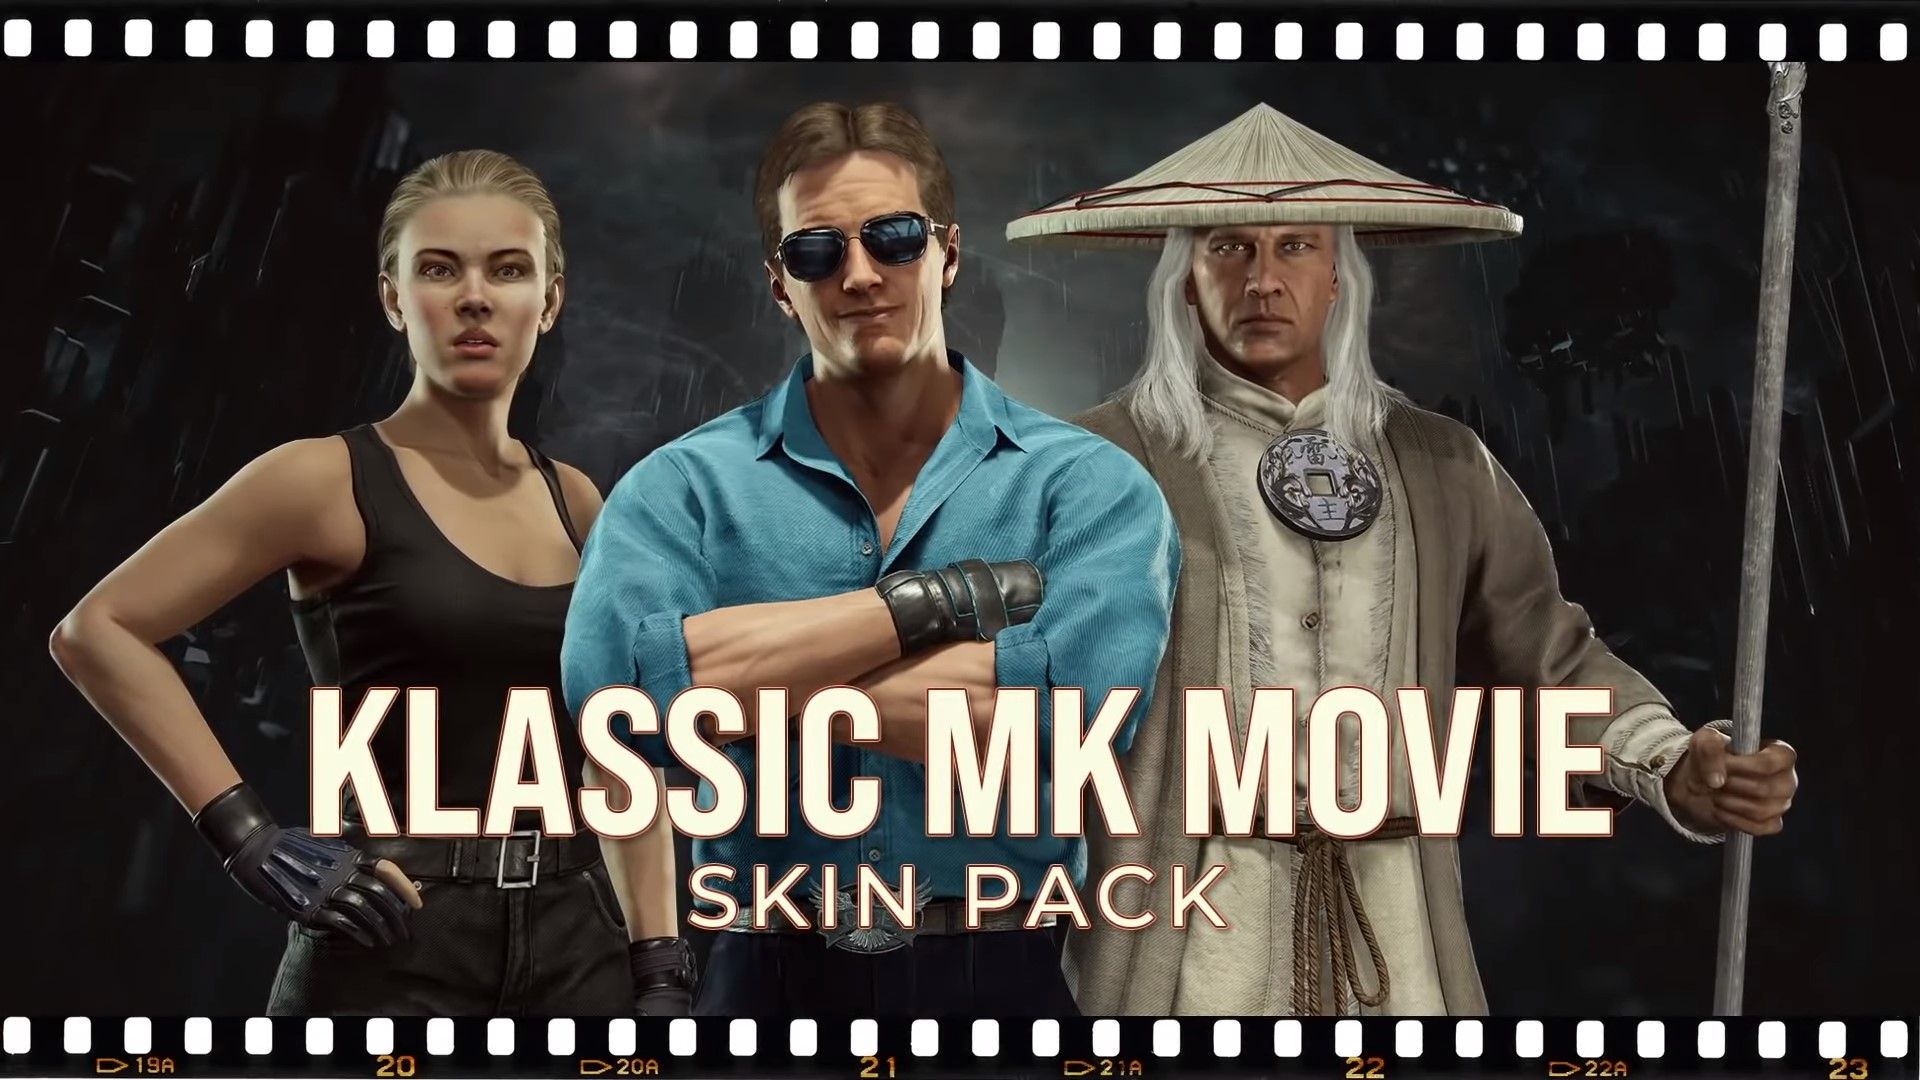 Mortal Kombat 11's Klassic Femme Fatale Pack out now